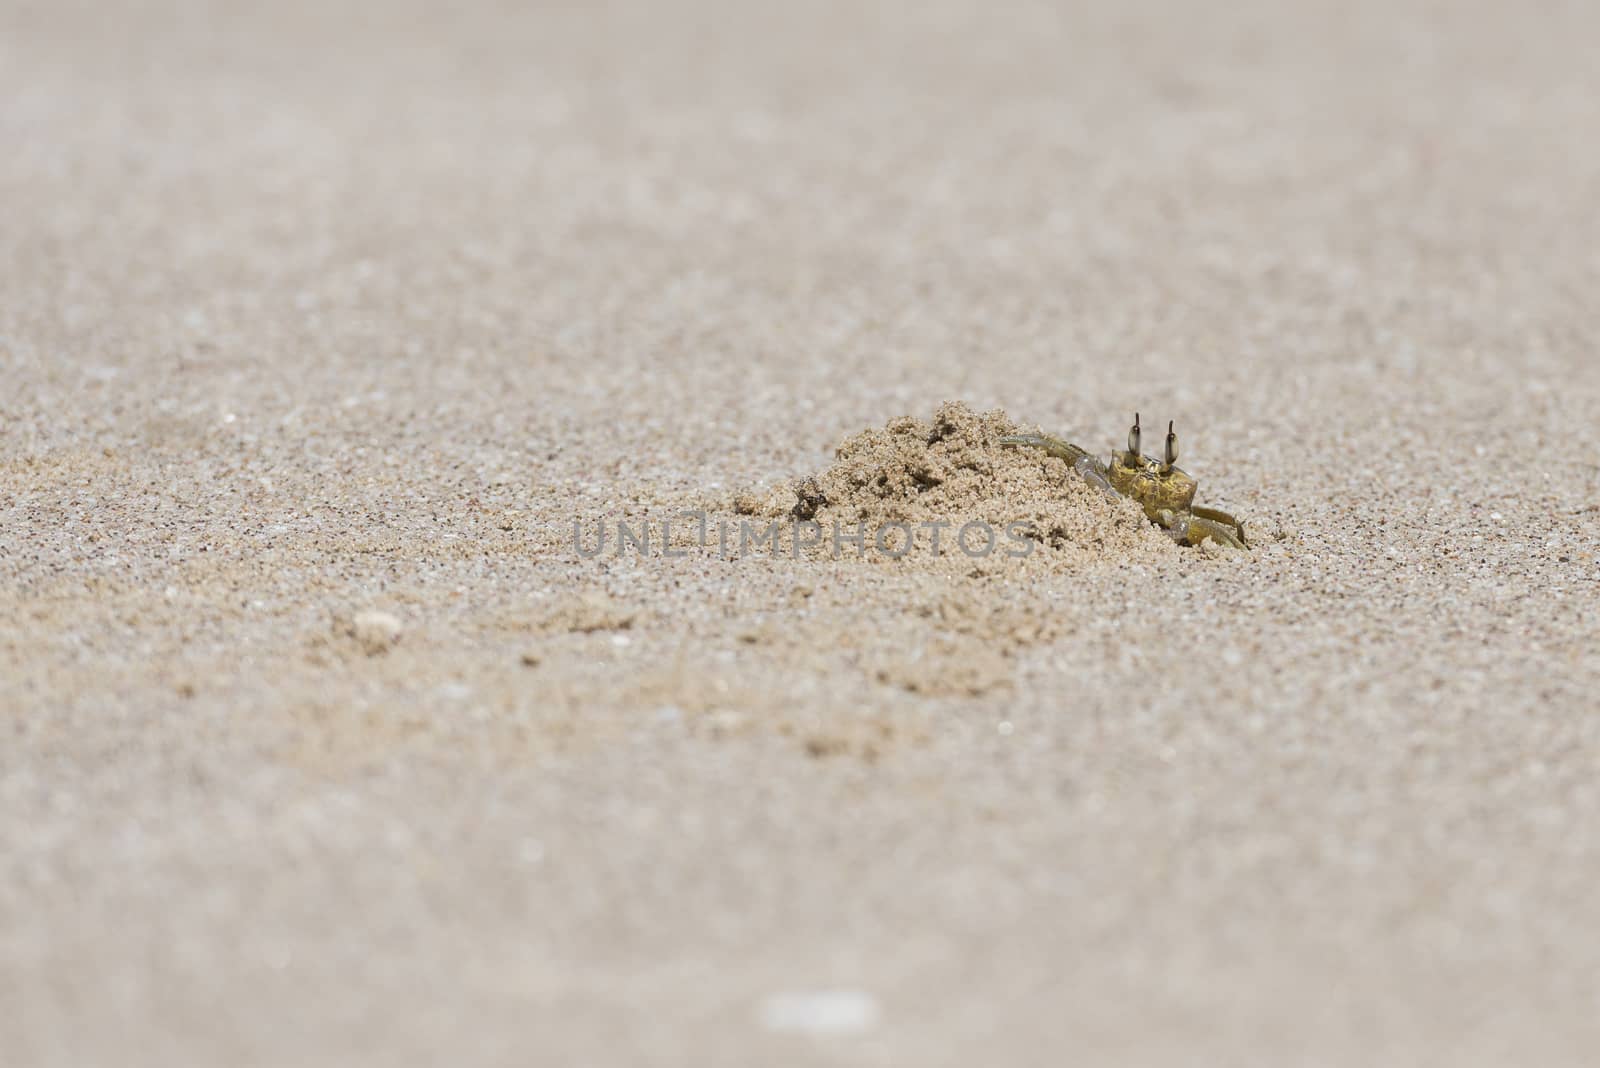 Ghost crab on a beach in Ras Al Jinz, Sultanate of Oman